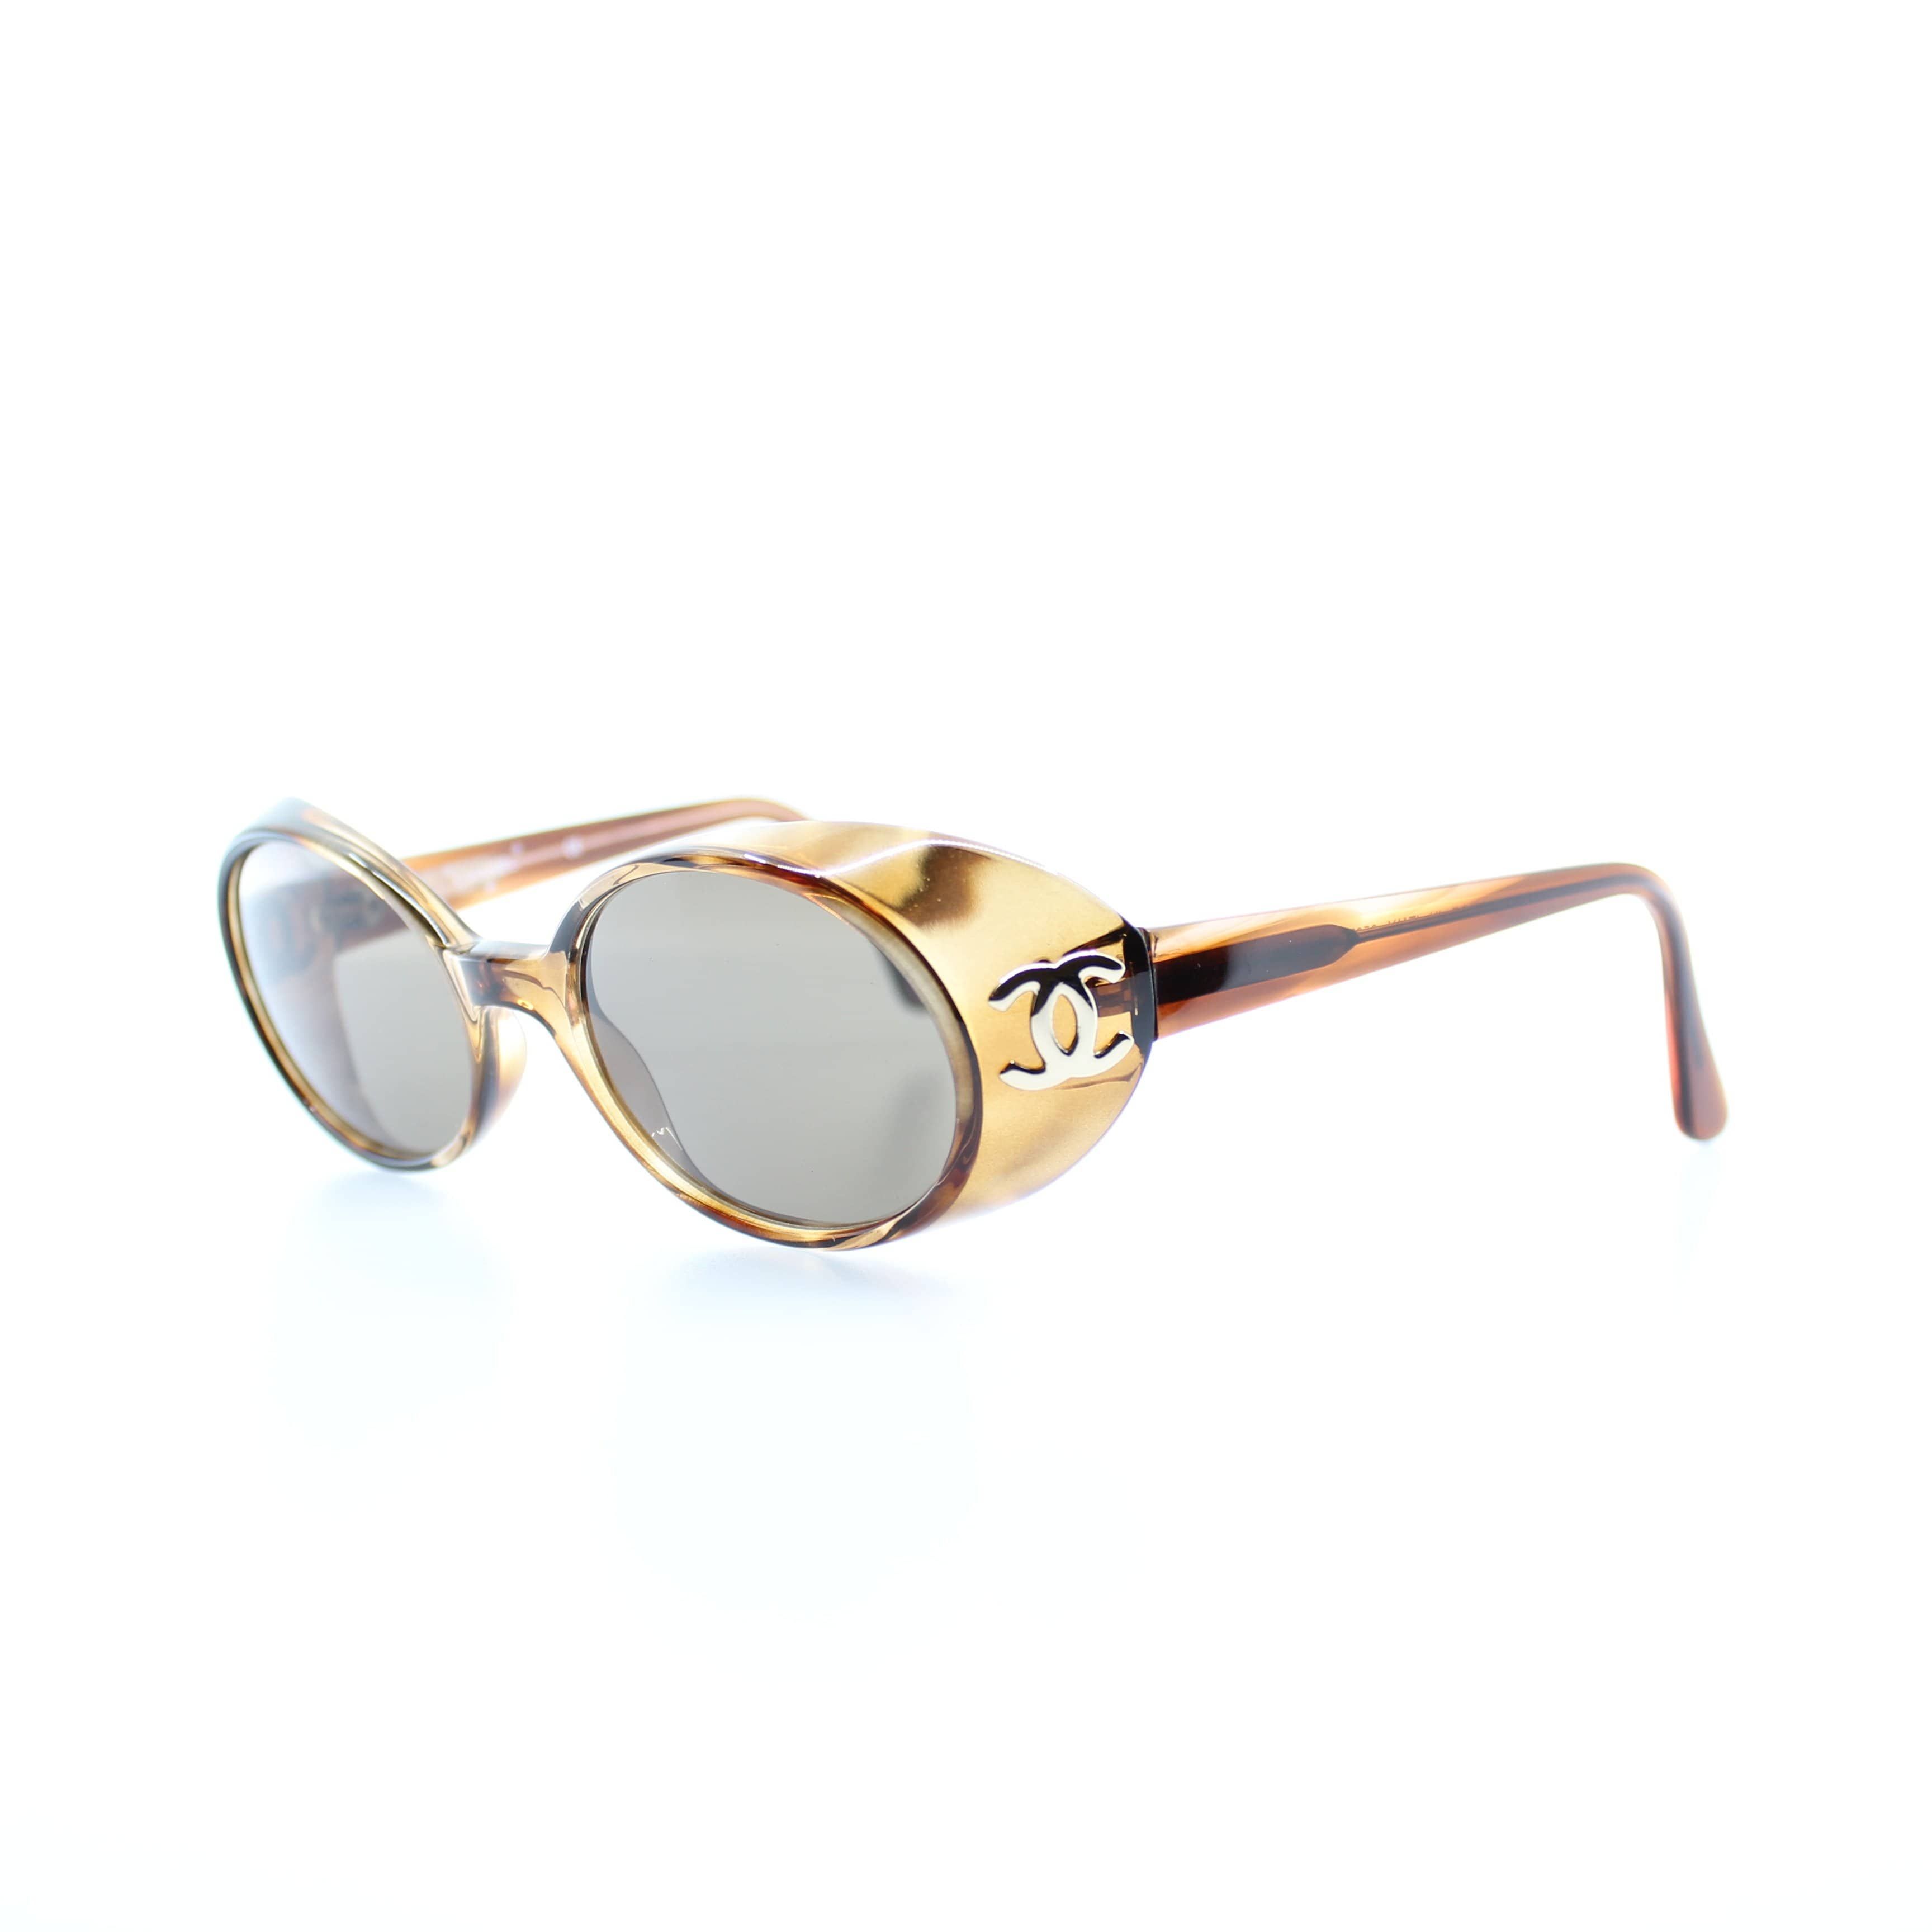 CHANEL, Accessories, Authentic Chanel Classic Polarized Brown Sunglasses  583 C714t5 5918 135 2p